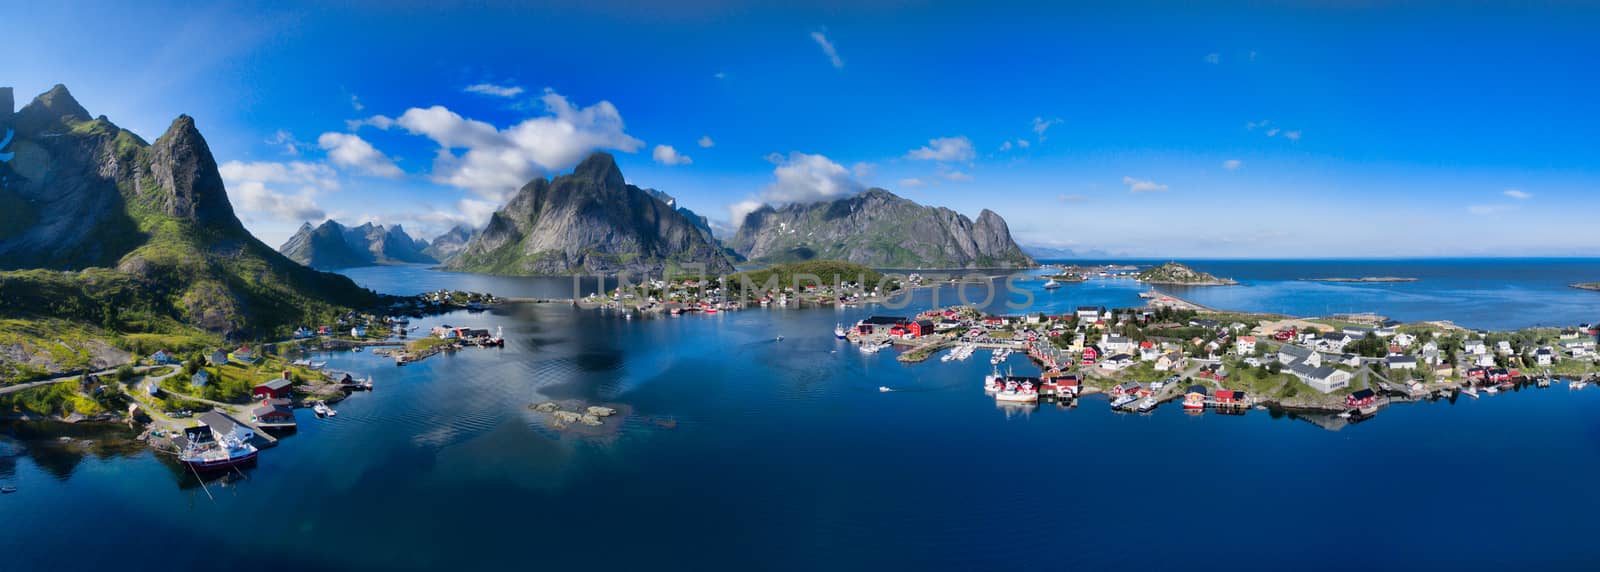 Aerial panorama of Reine, scenic fishing town on Lofoten islands in Norway